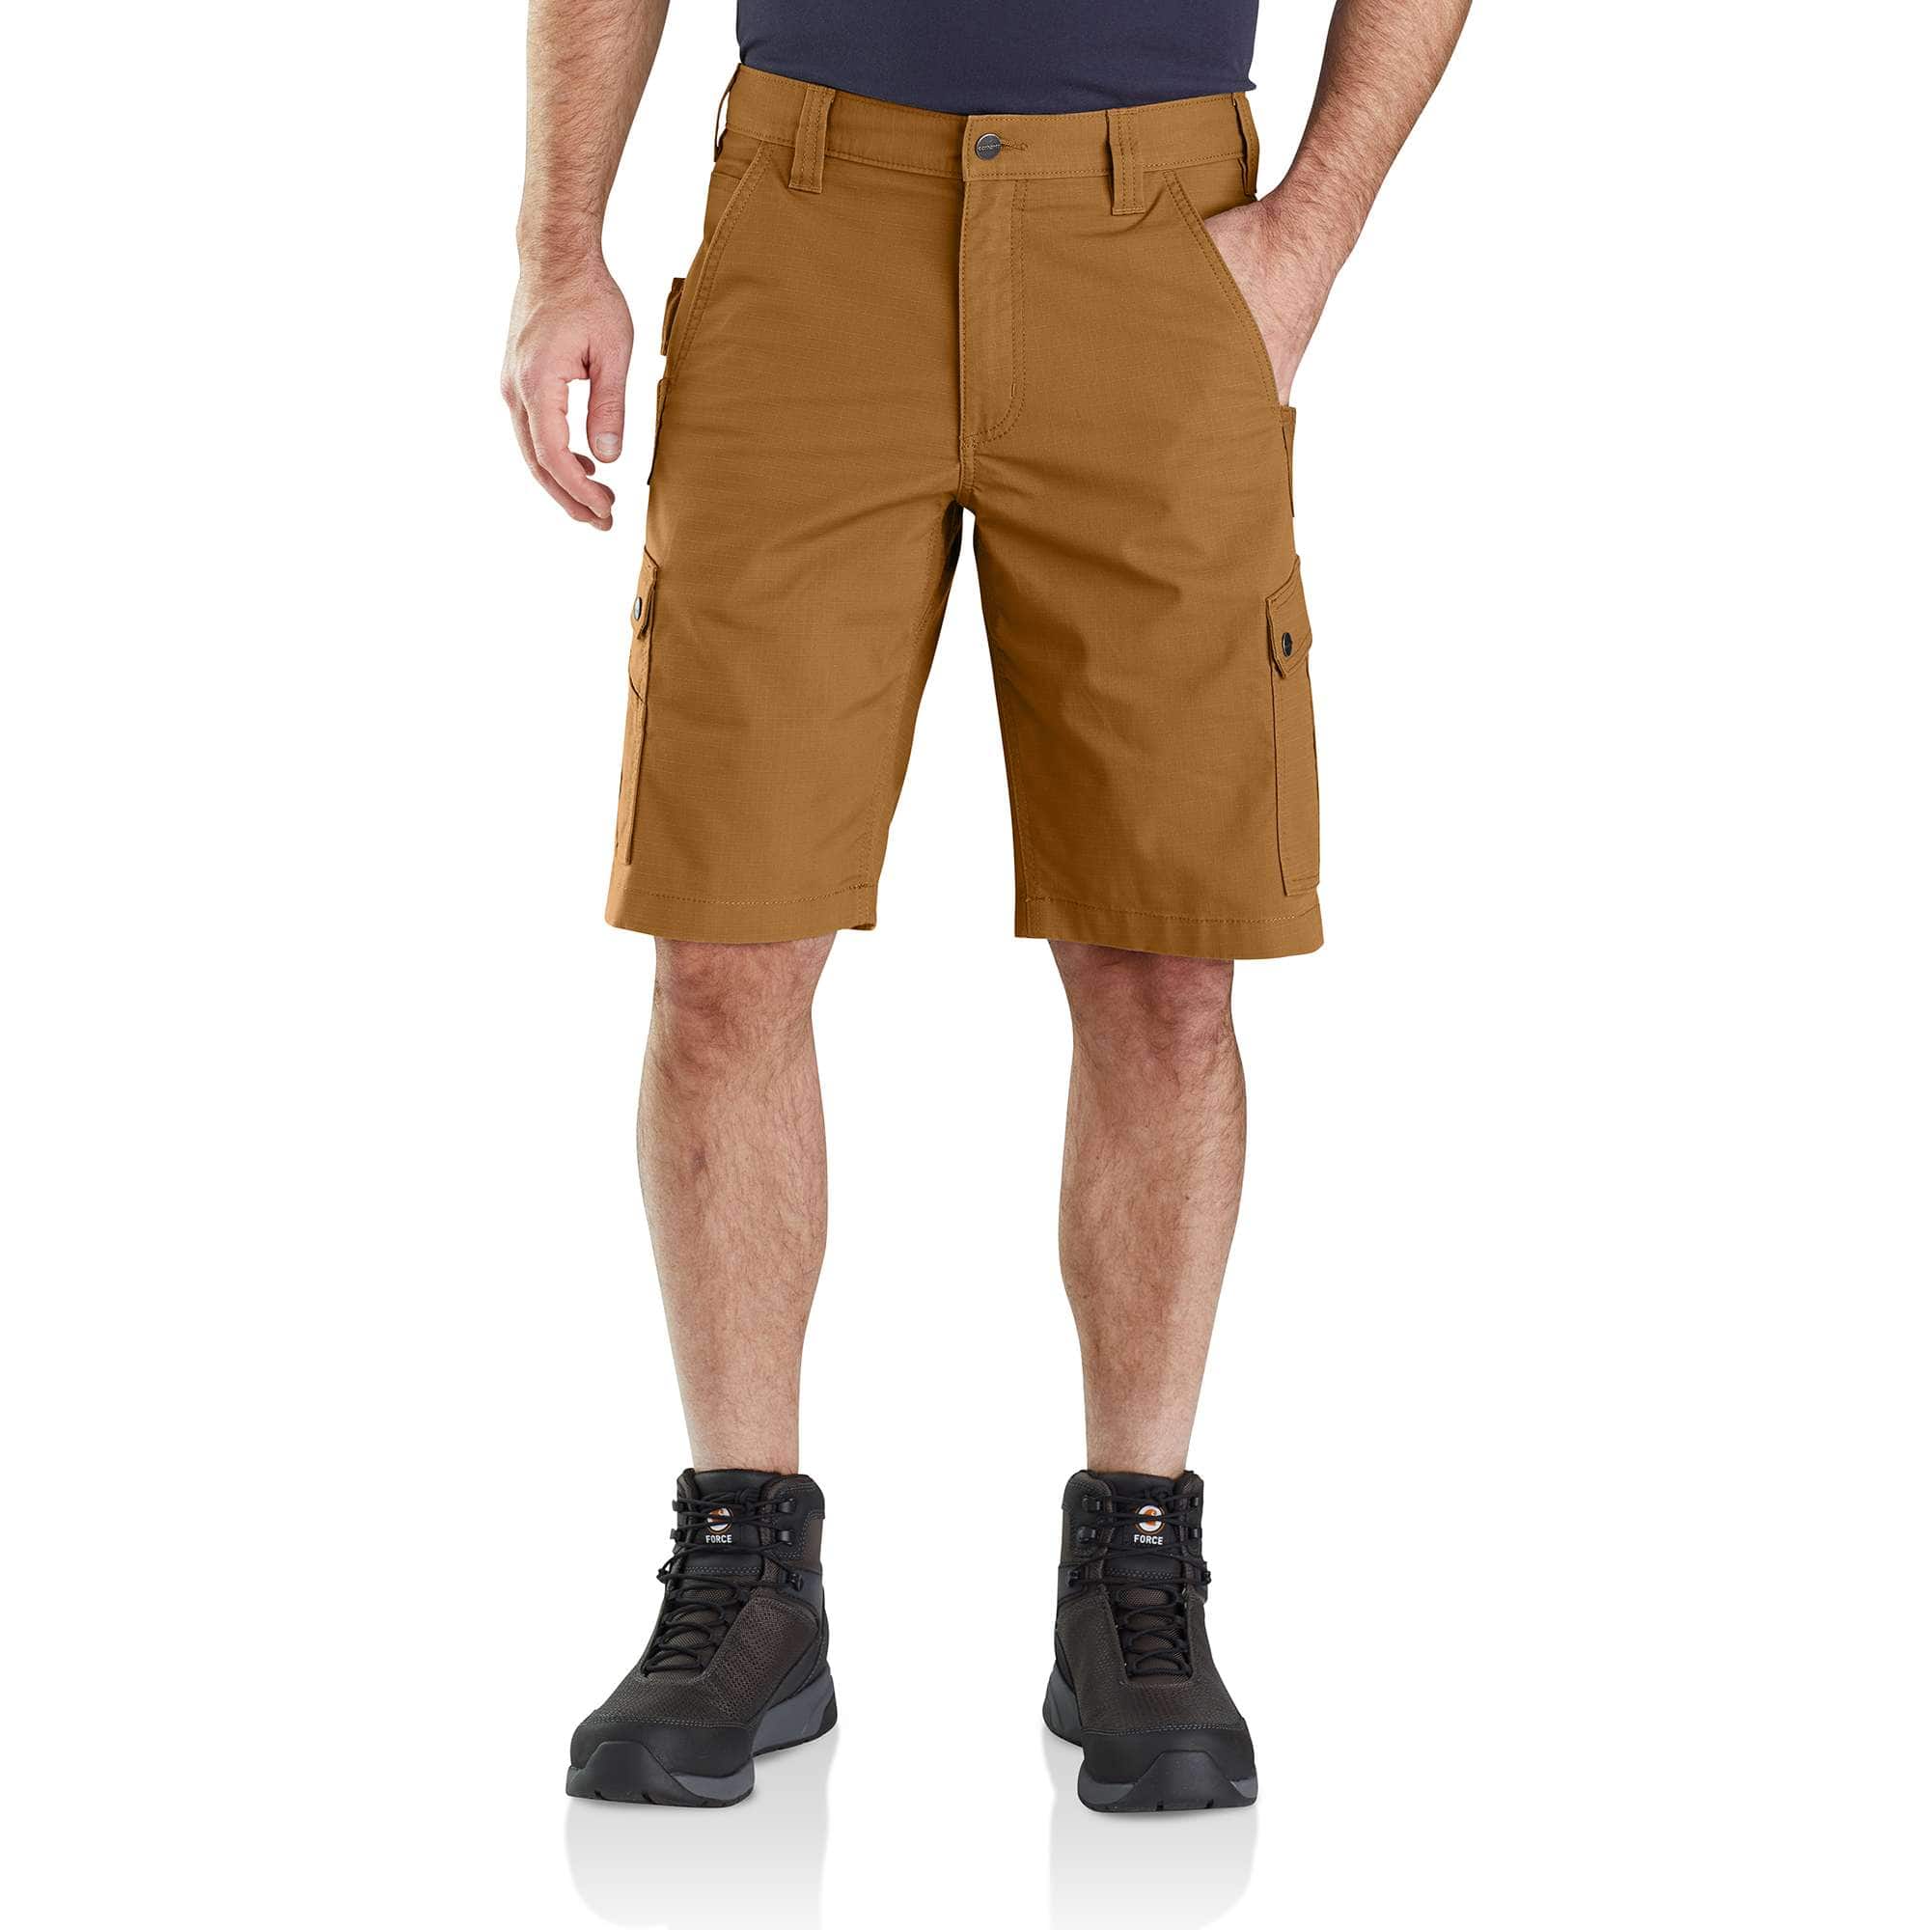 Men's Work Shorts